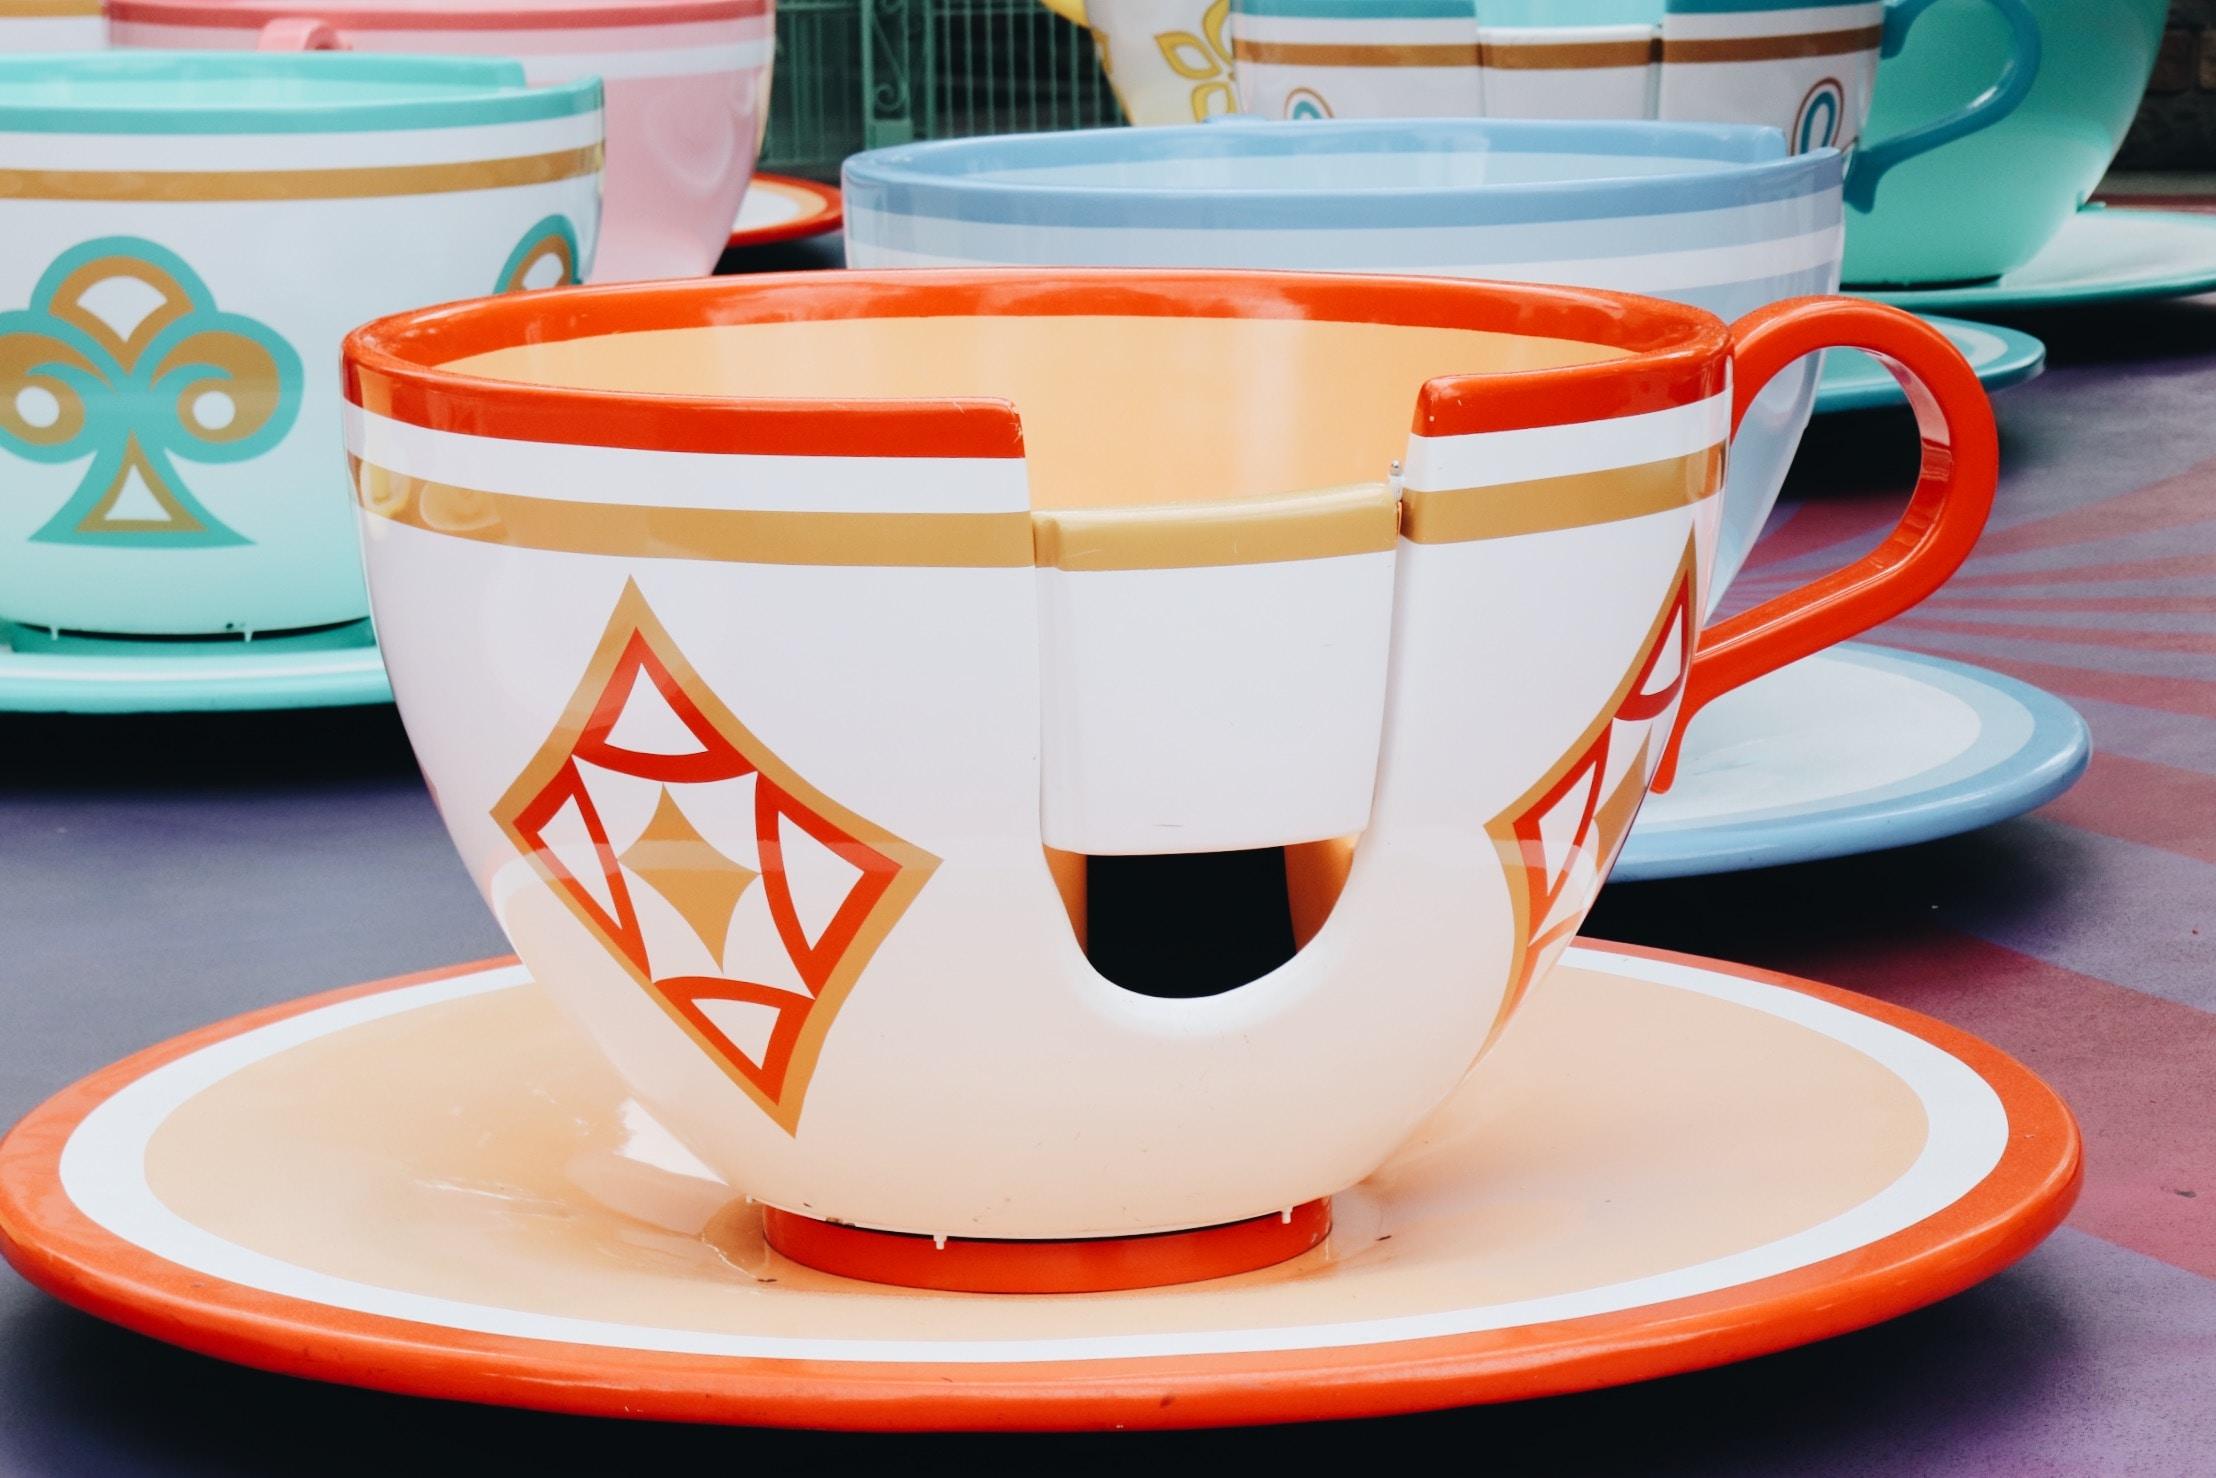 Alice in Wonderland Teacup Ride -- Round and round, with no destination.